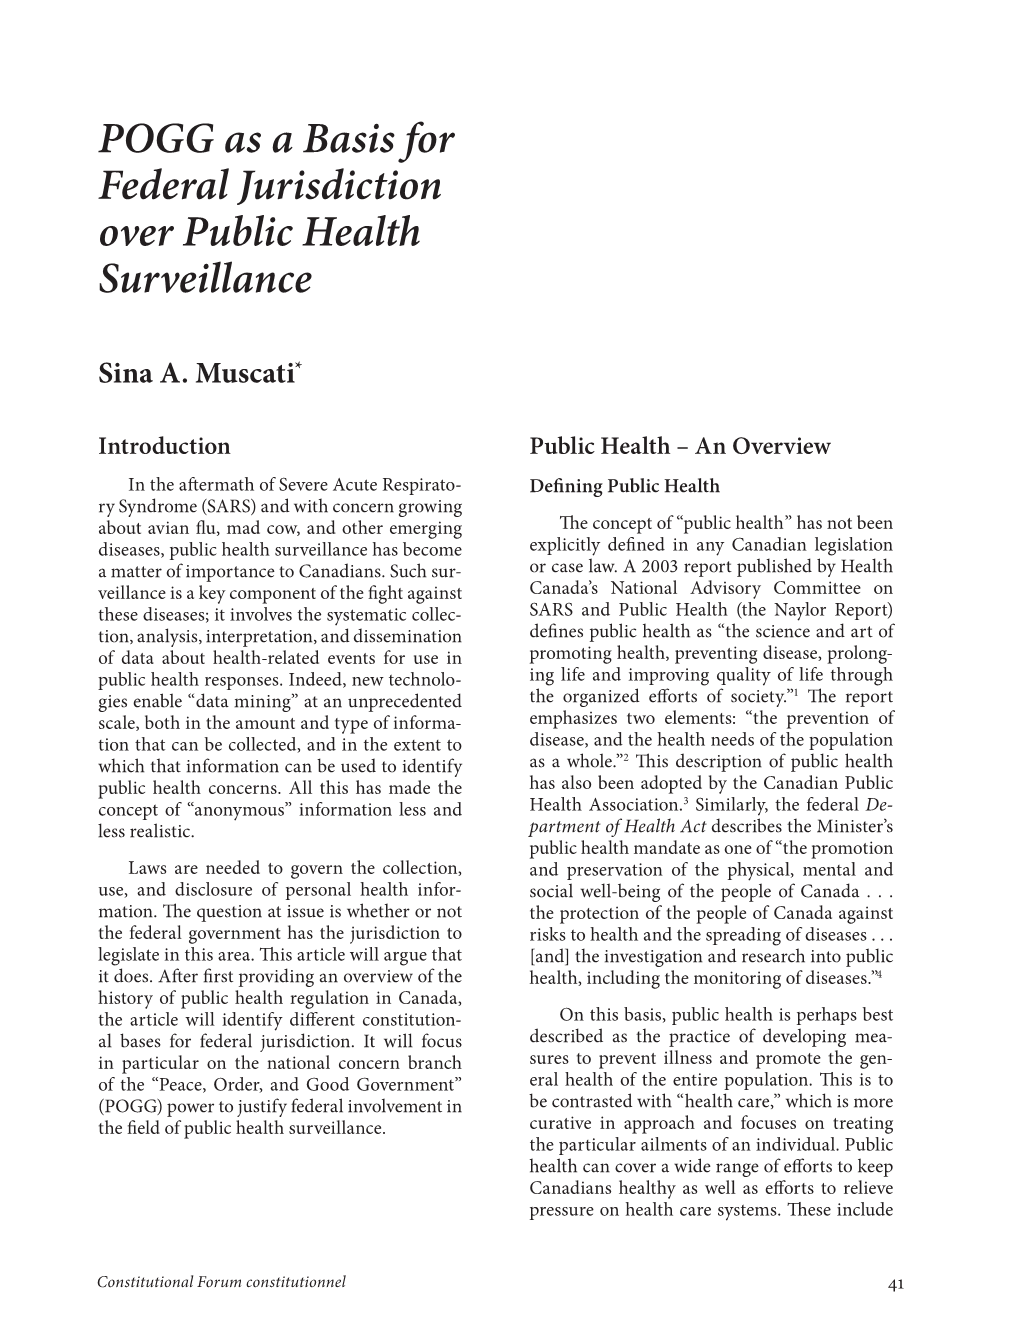 POGG As a Basis for Federal Jurisdiction Over Public Health Surveillance